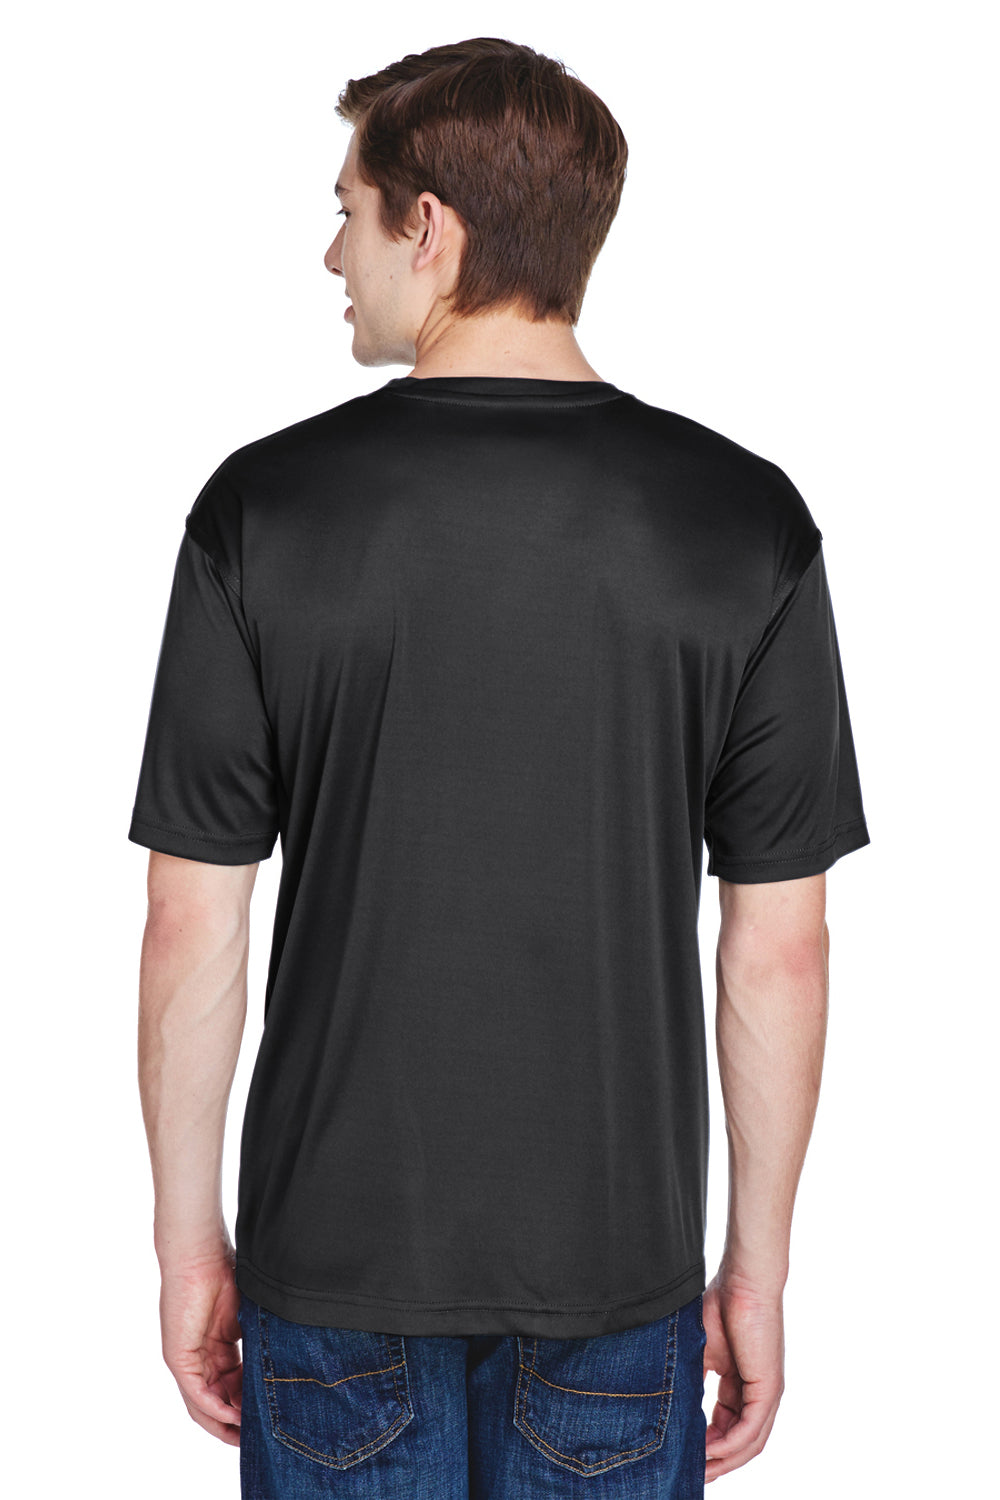 UltraClub 8620 Mens Cool & Dry Performance Moisture Wicking Short Sleeve Crewneck T-Shirt Black Back